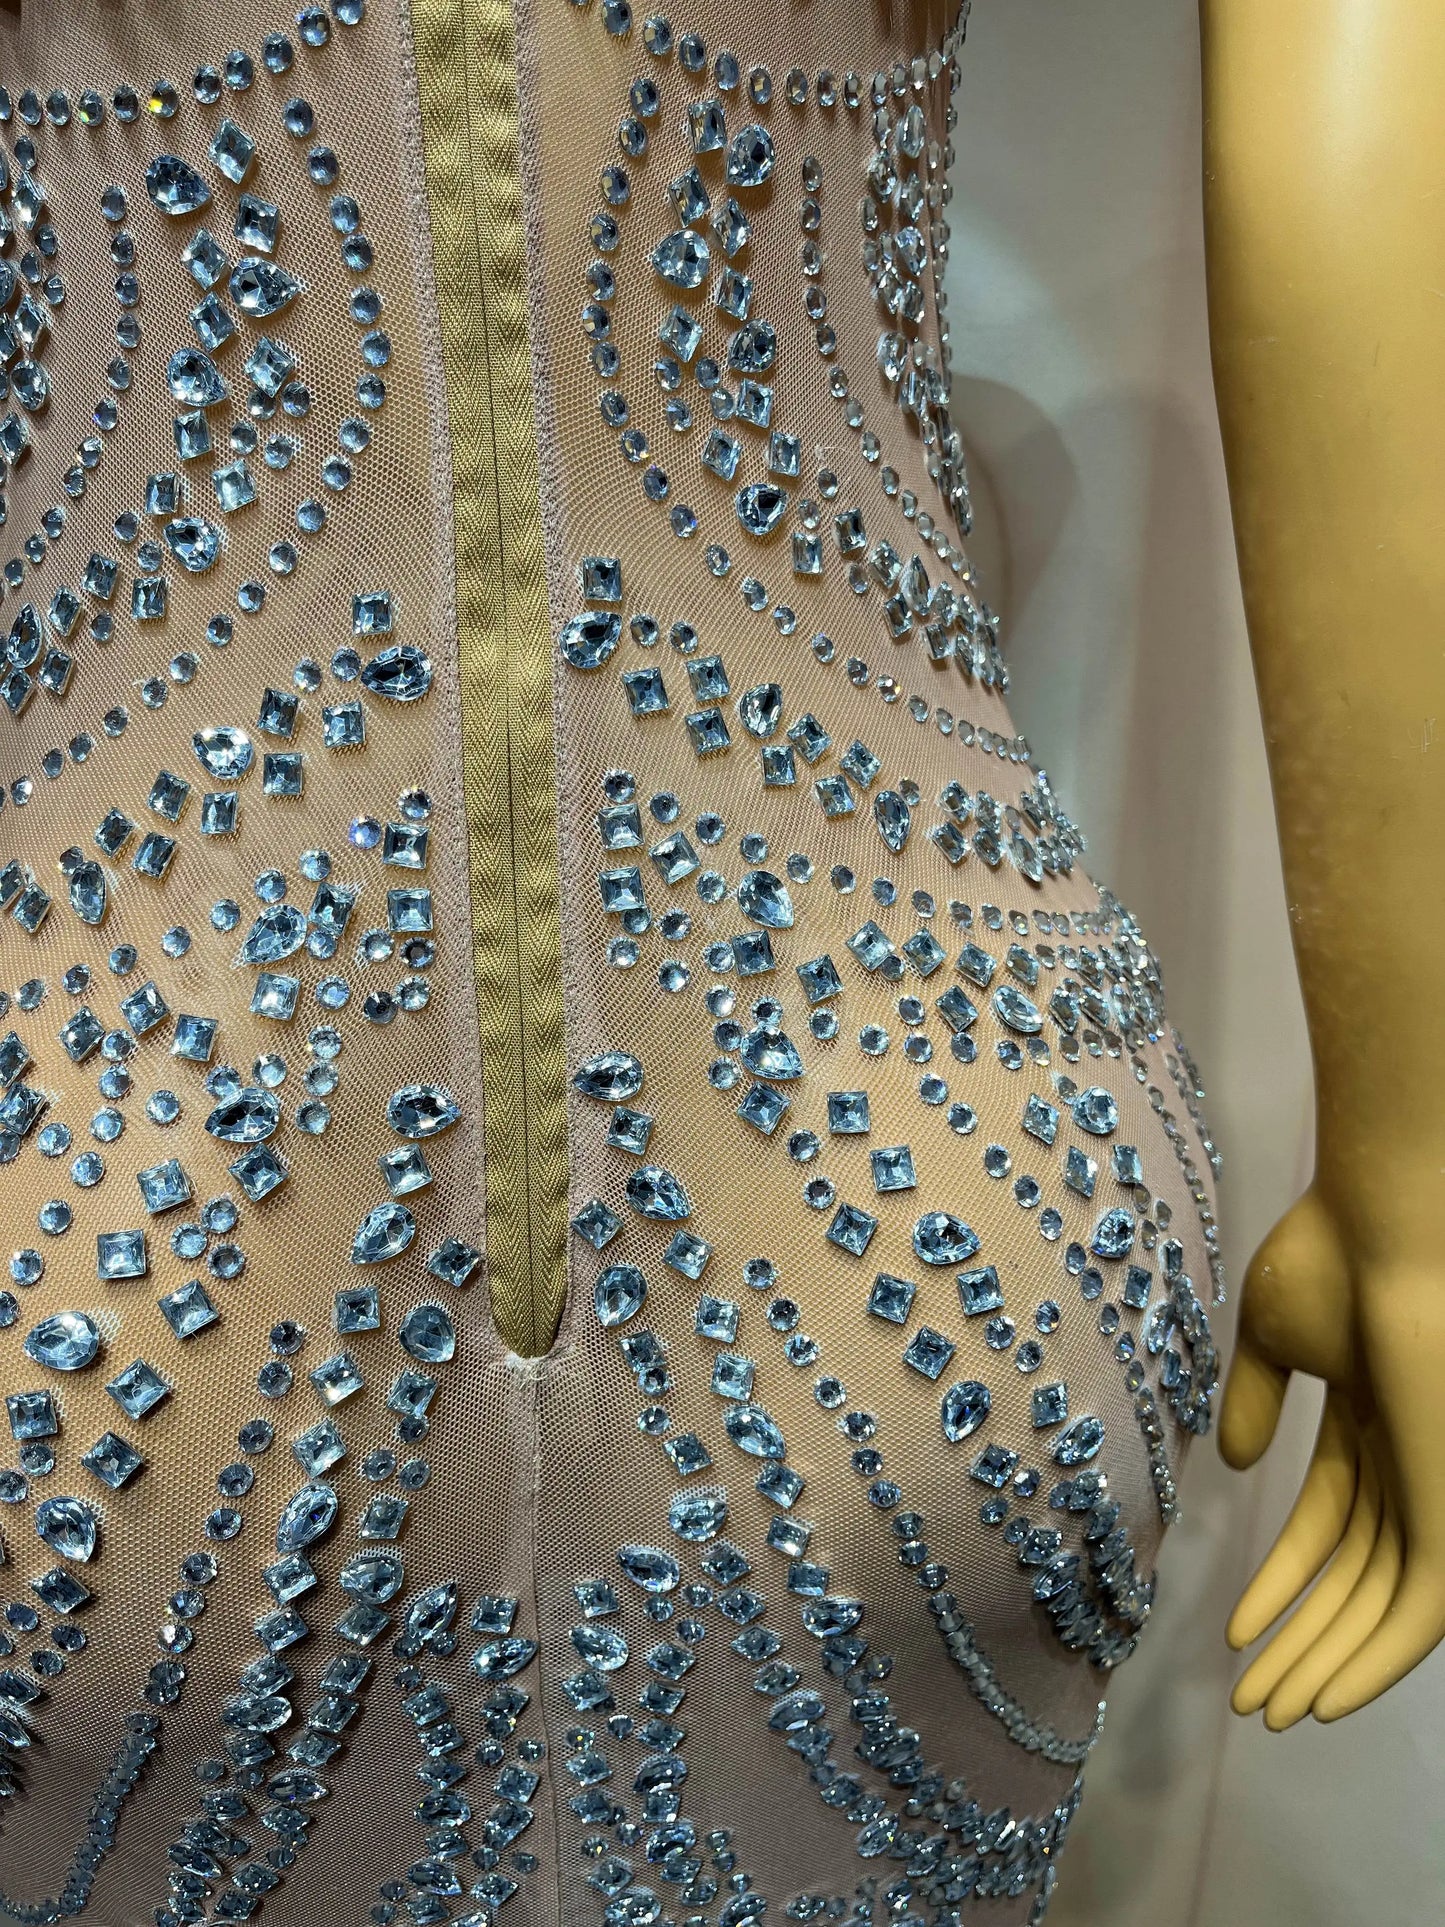 Glitz & Glamour Extravaganza: Bedazzled Crystal Fringe Stretch Dress